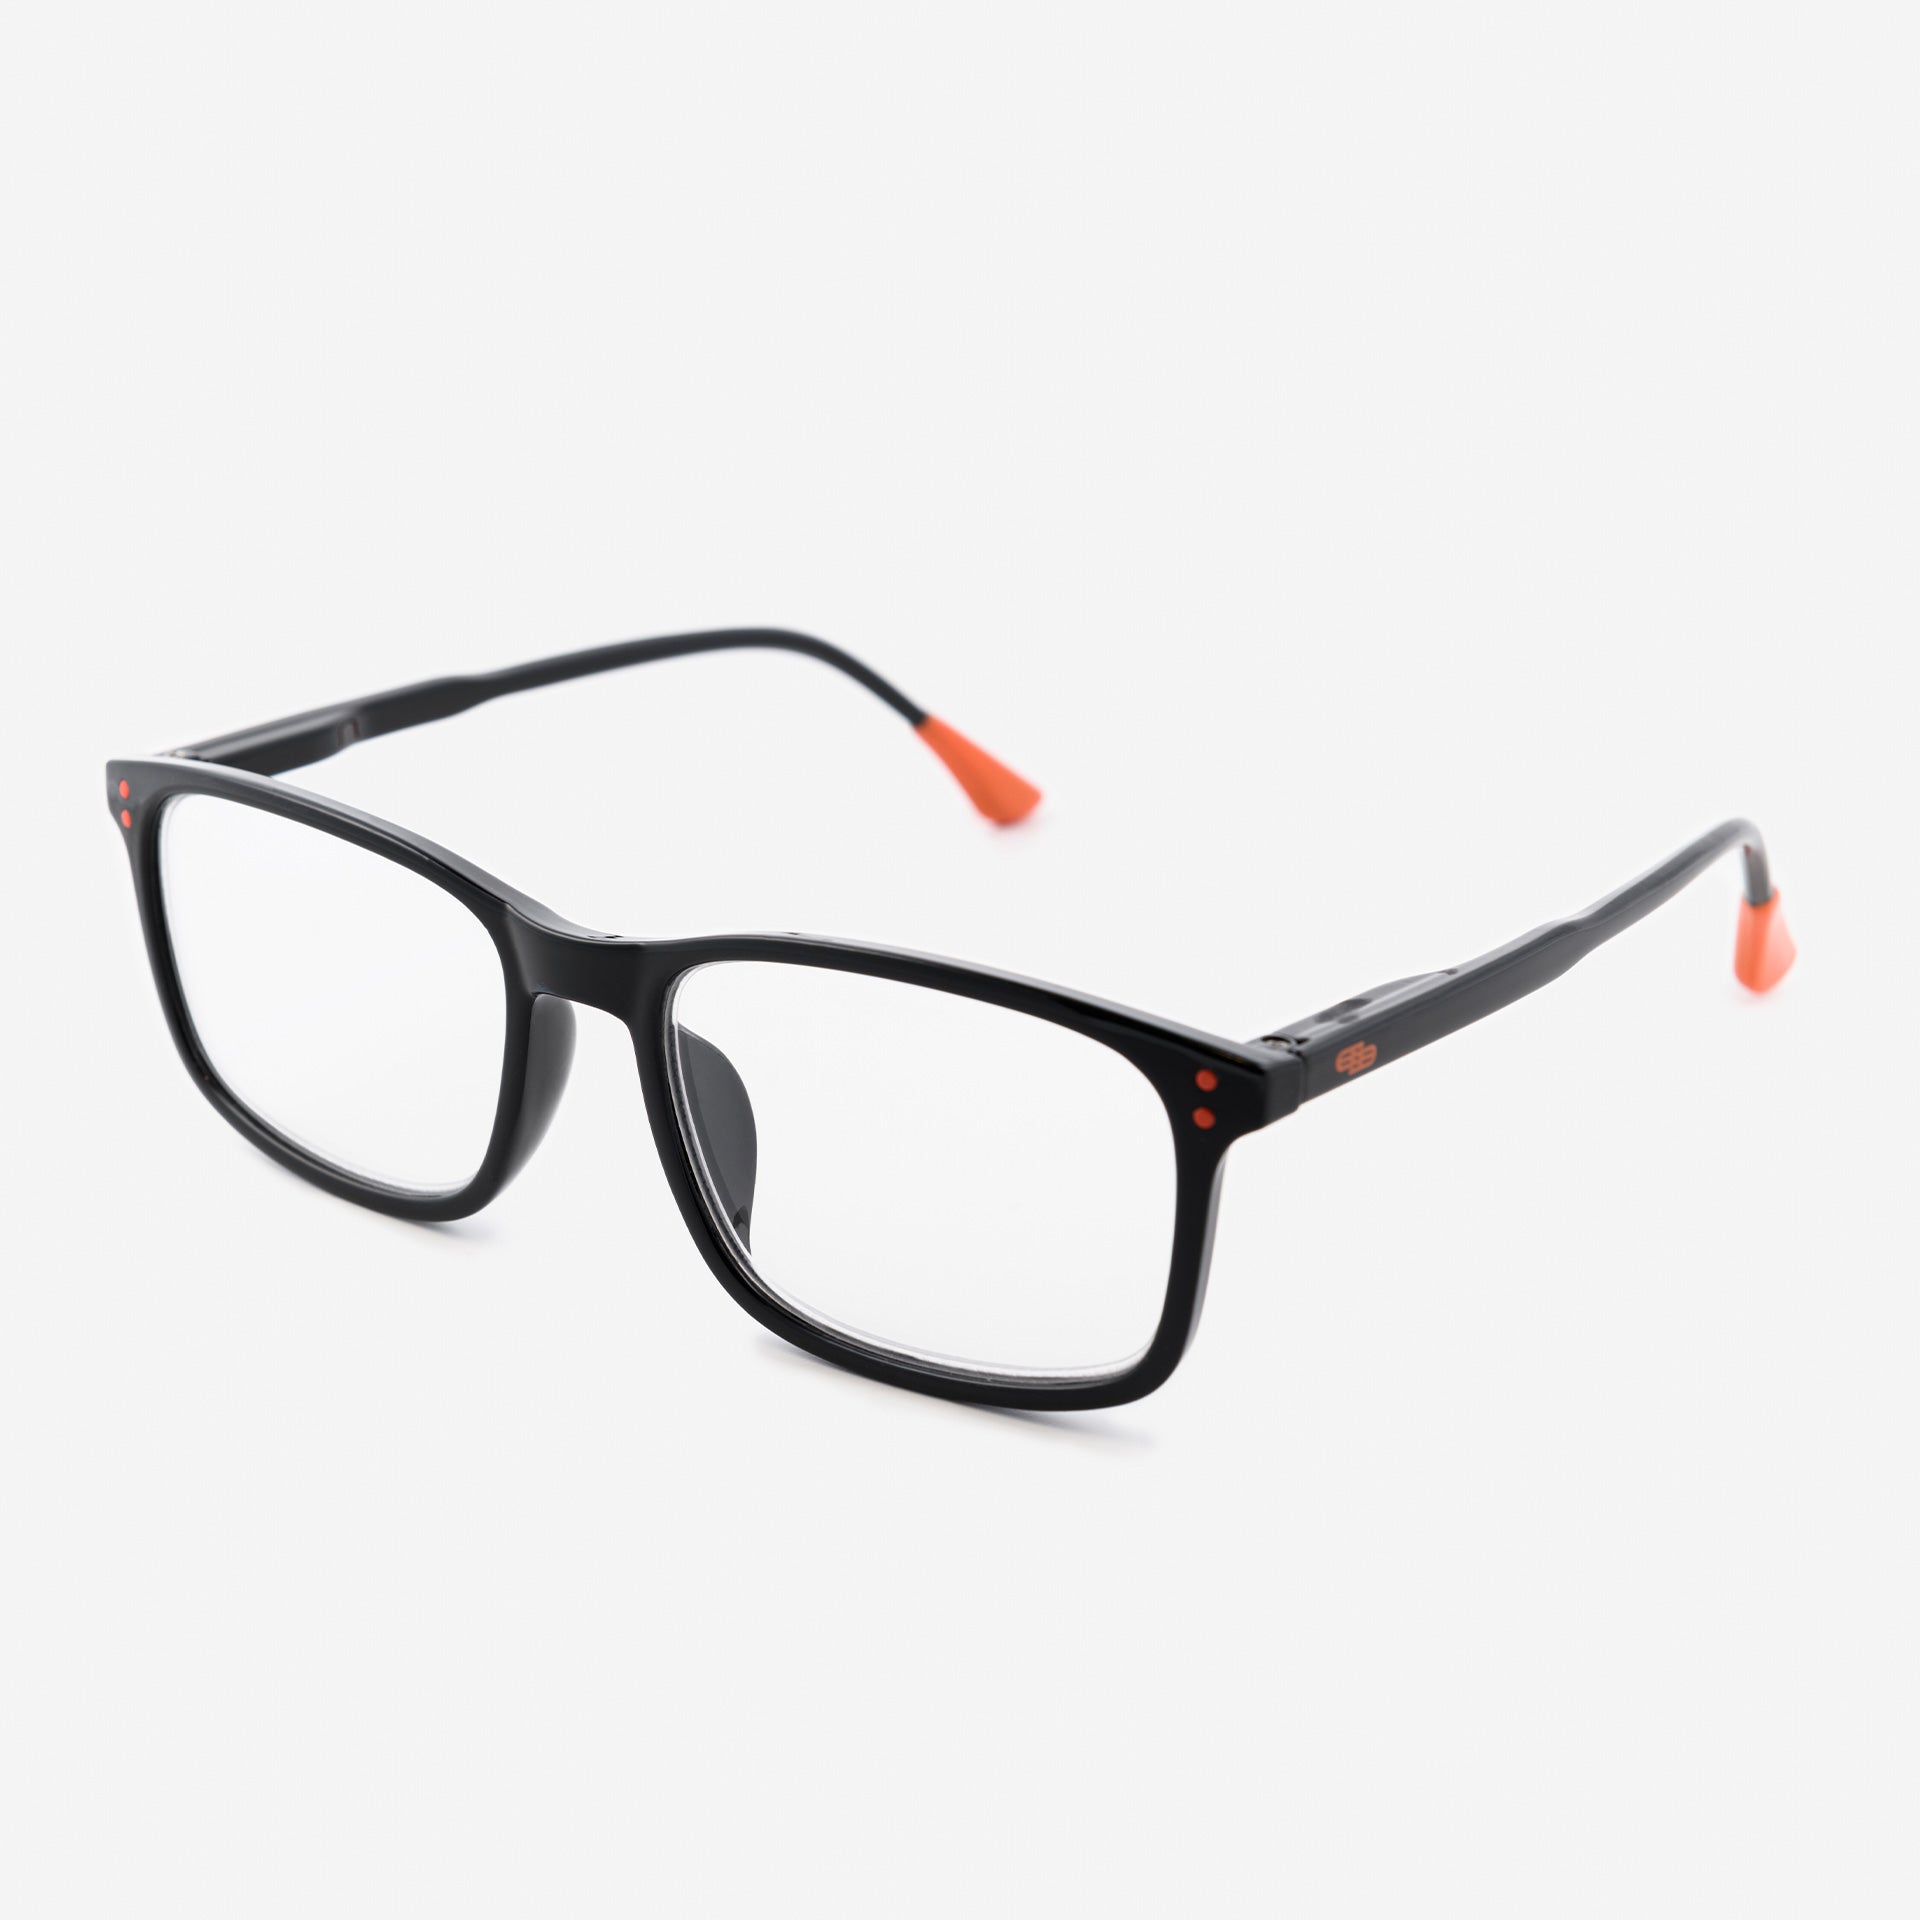 Black and orange square reading glasses